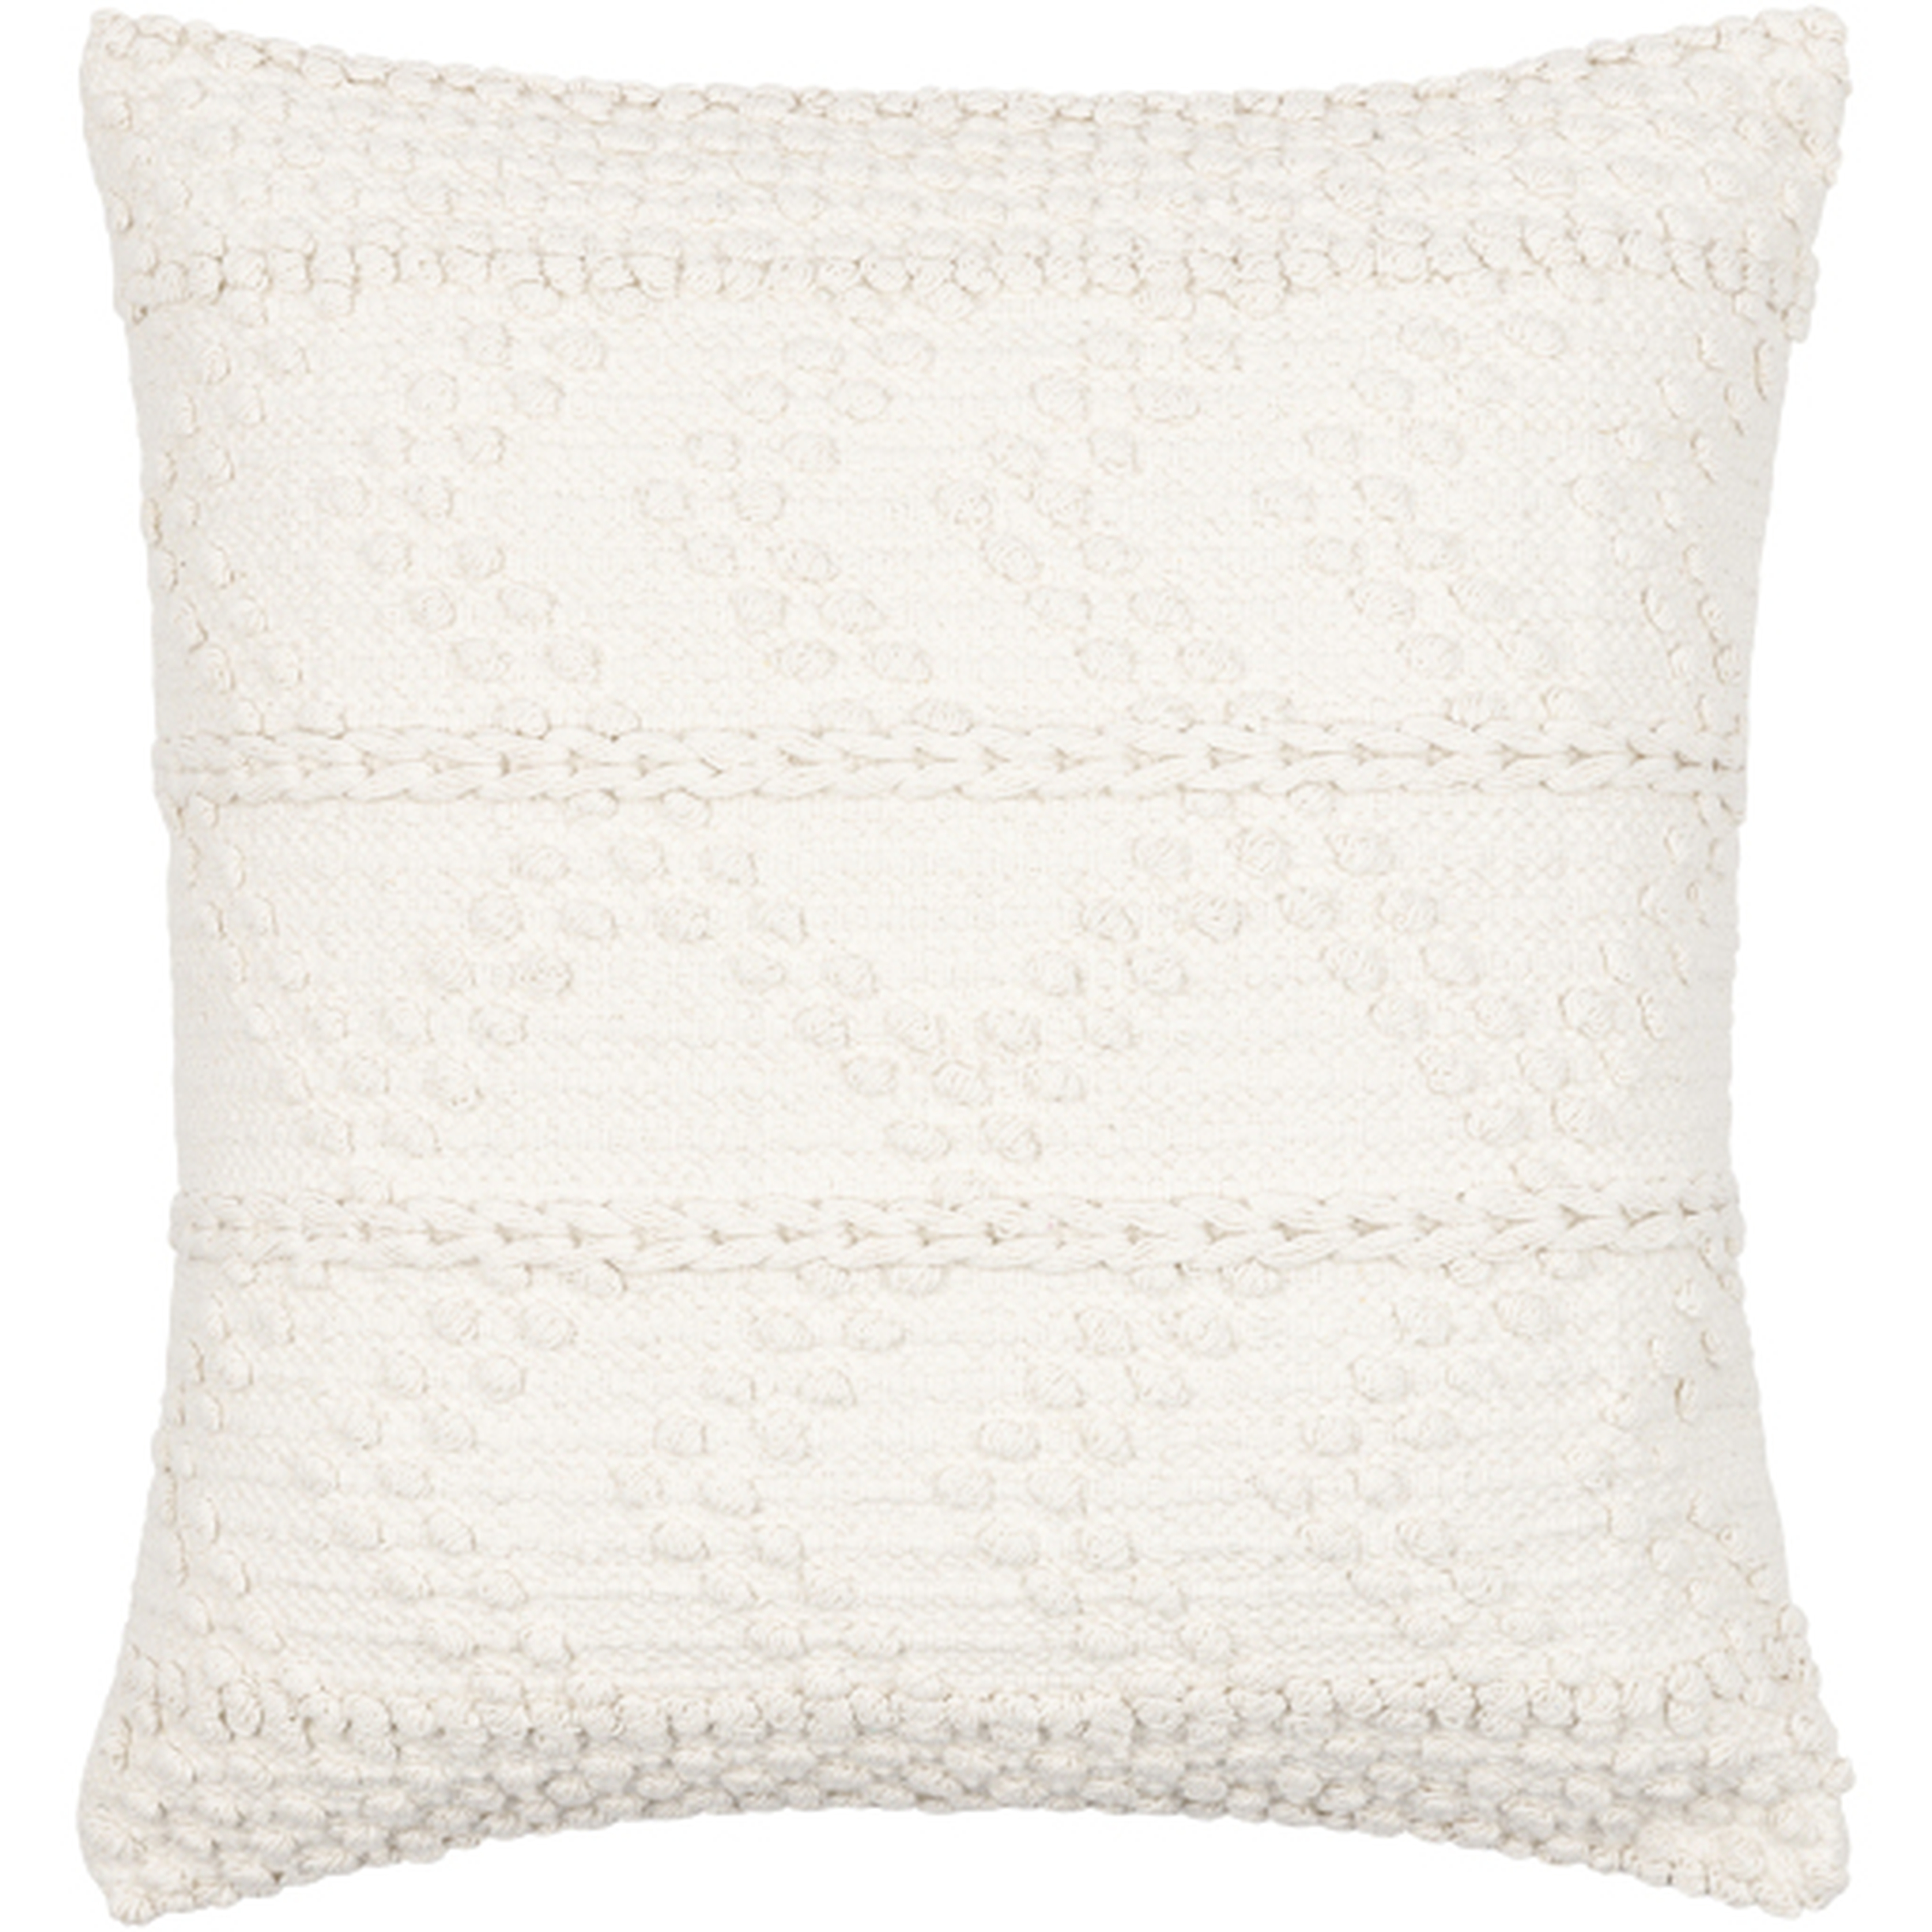 Merdo Throw Pillow, 22" x 22", with poly insert - Surya